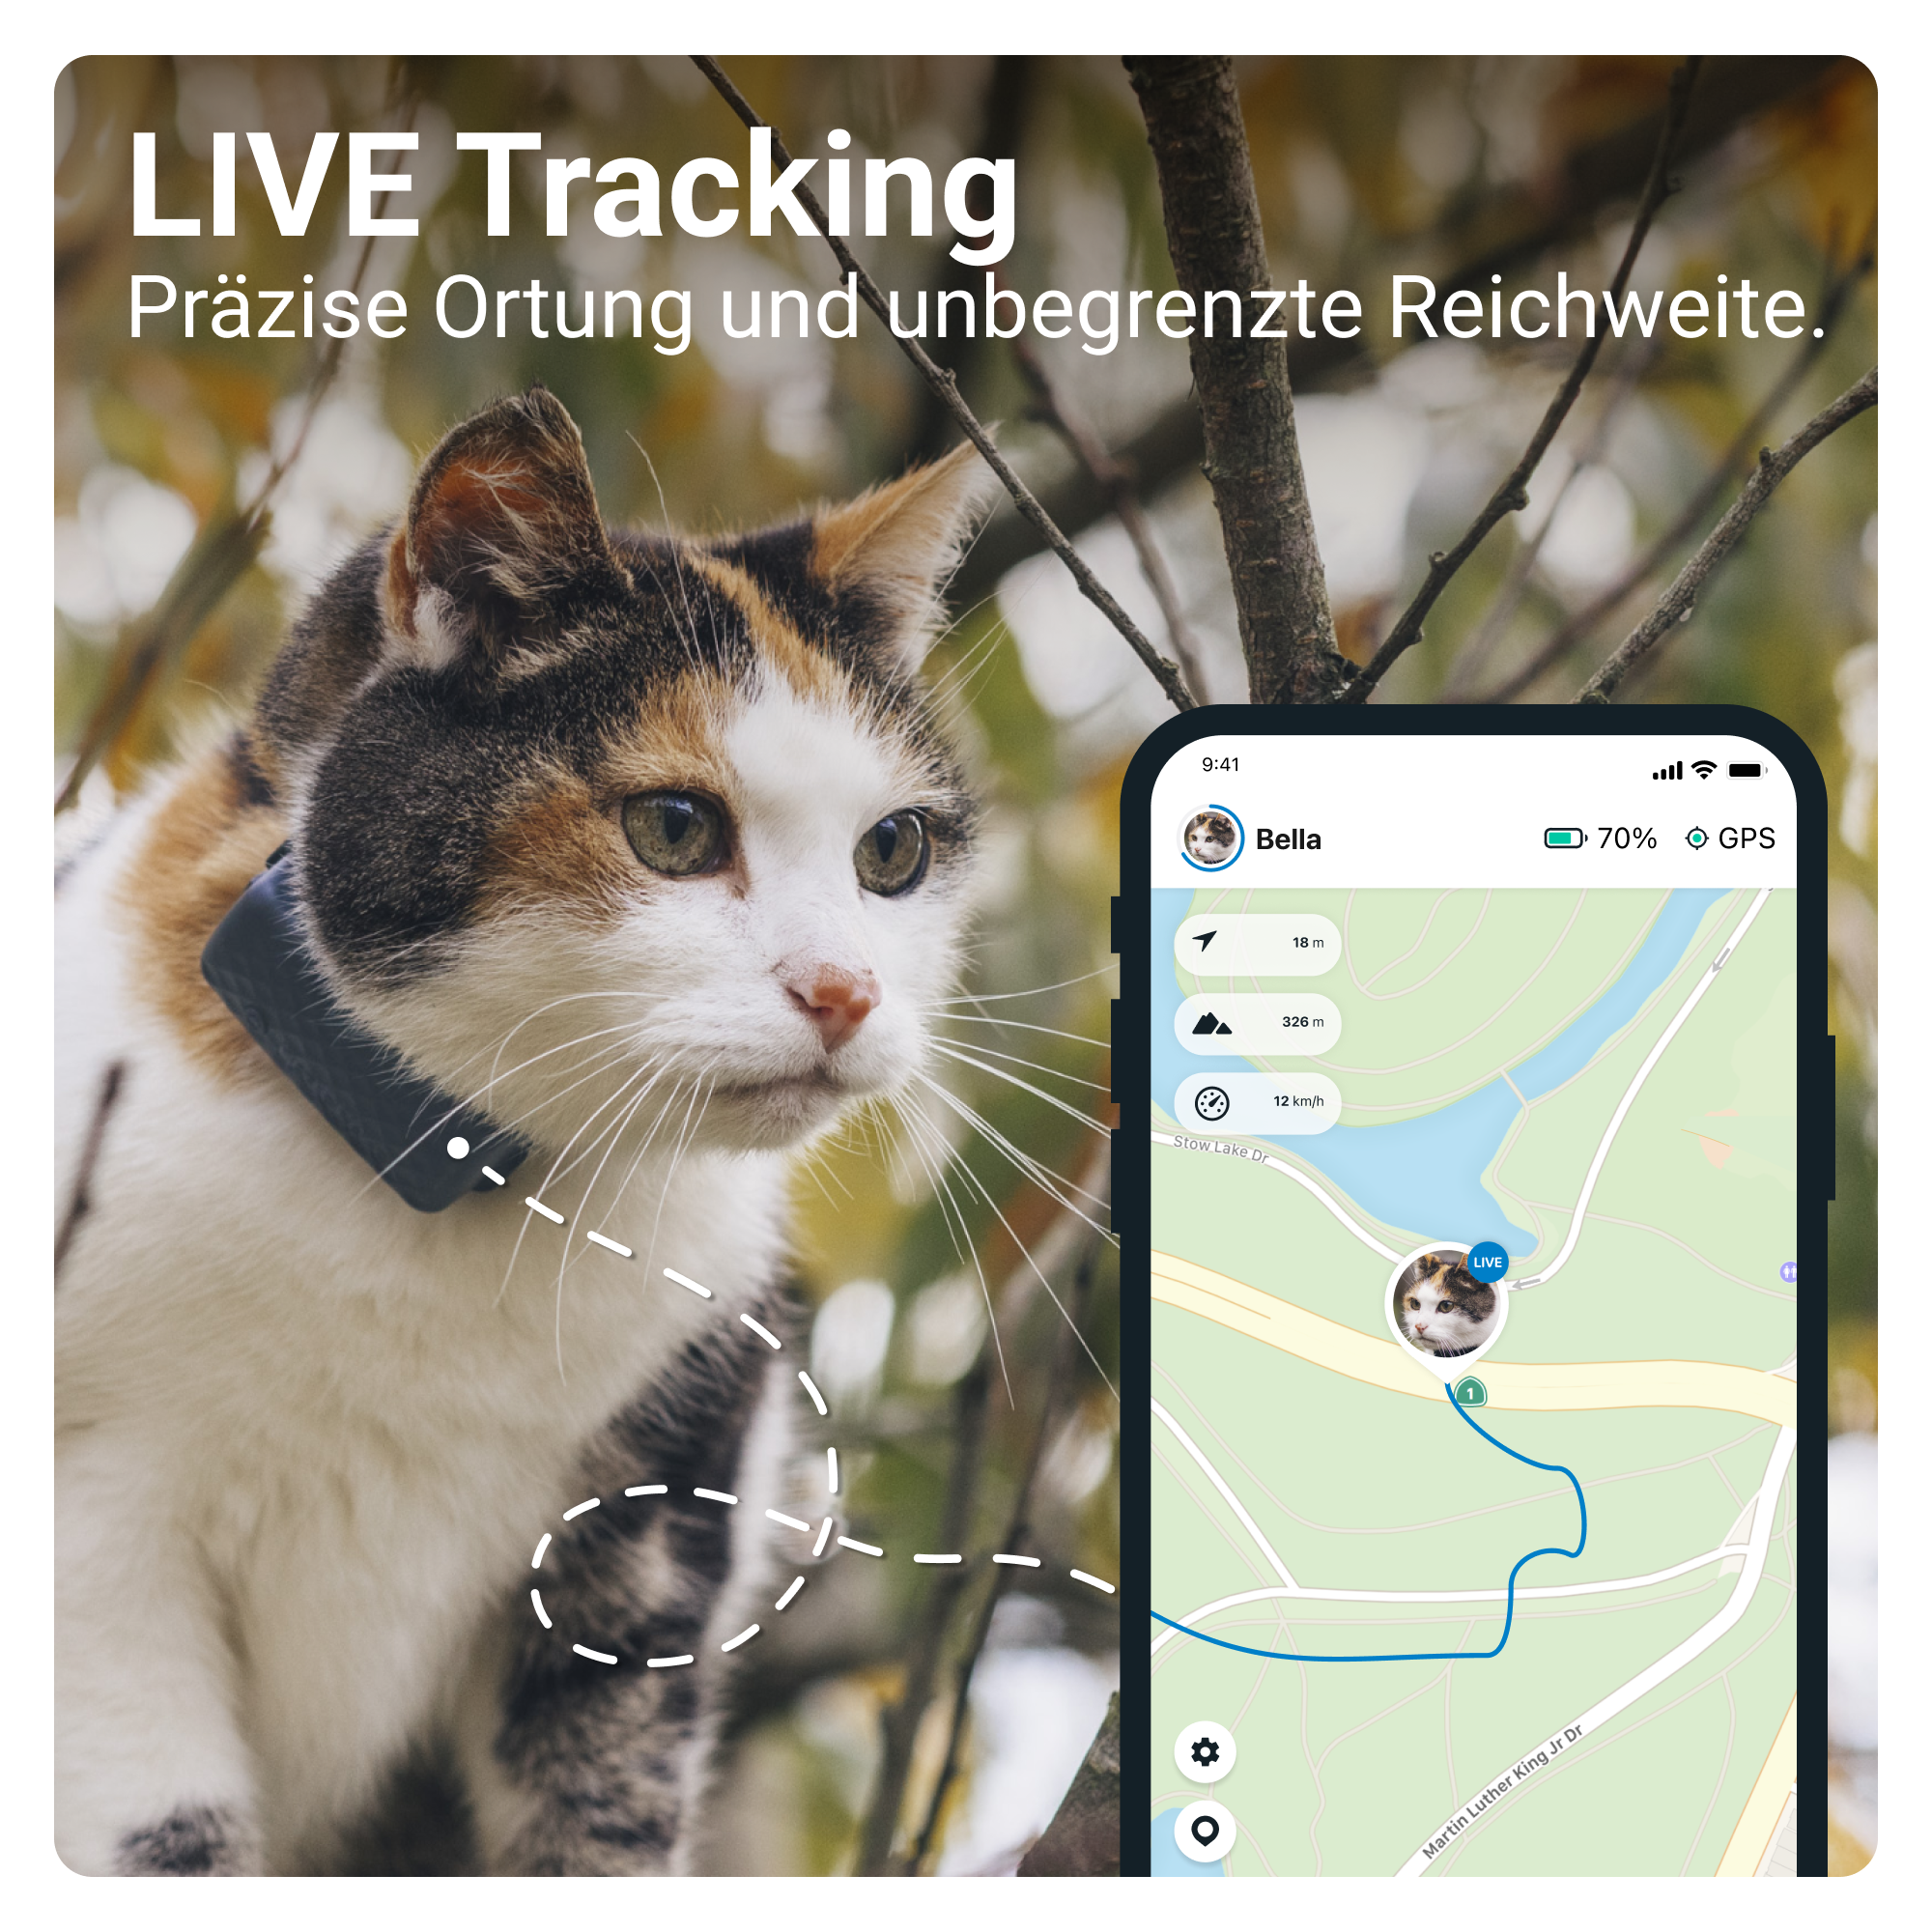 mit Aktivitätstracking Katze Tracker - GPS GPS Tractive GPS Tracker CAT TRACTIVE Mini